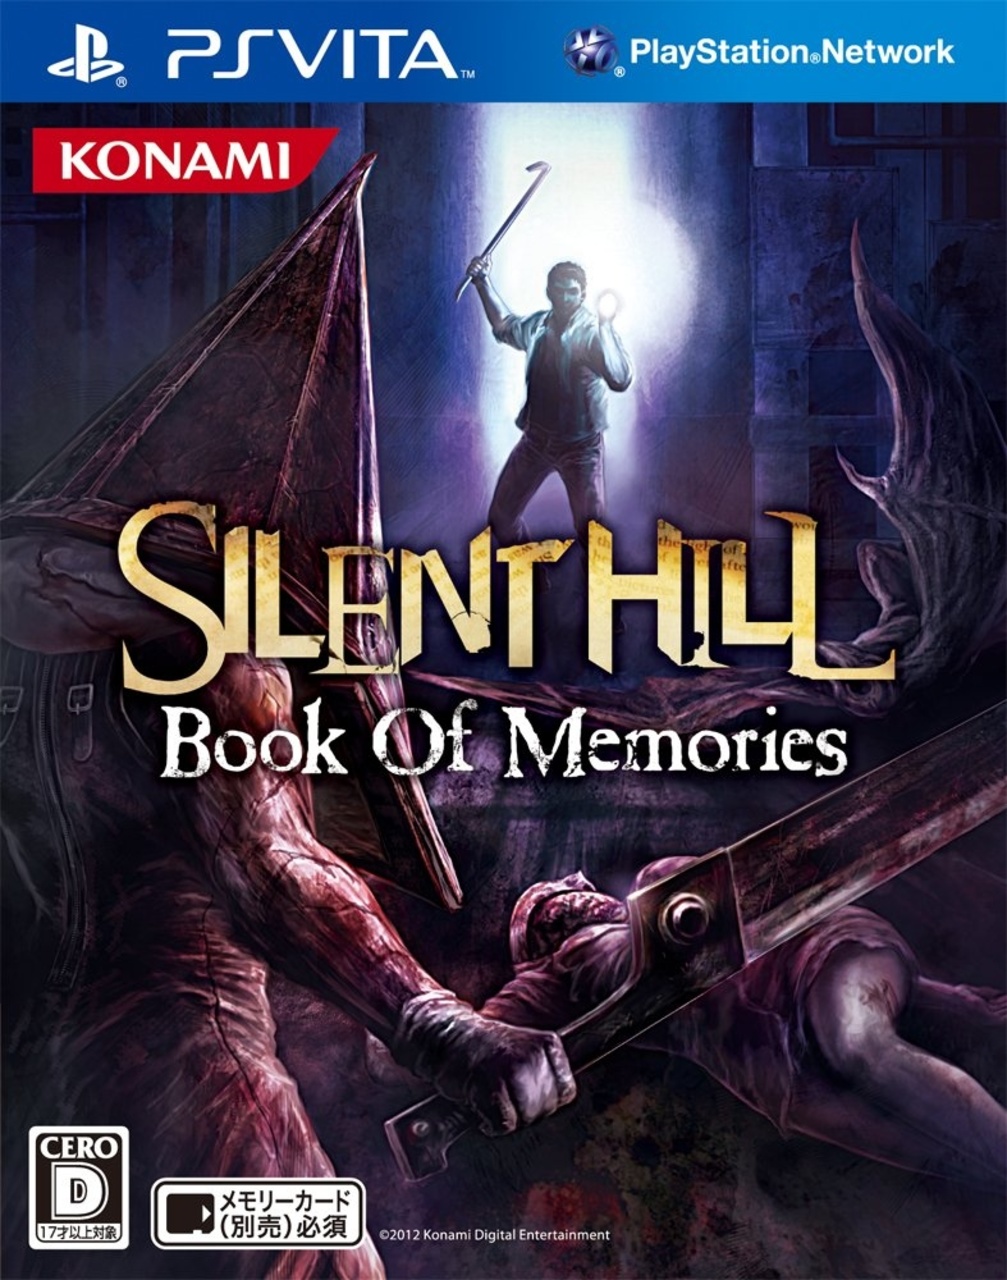 download silent hill book of memories 2012